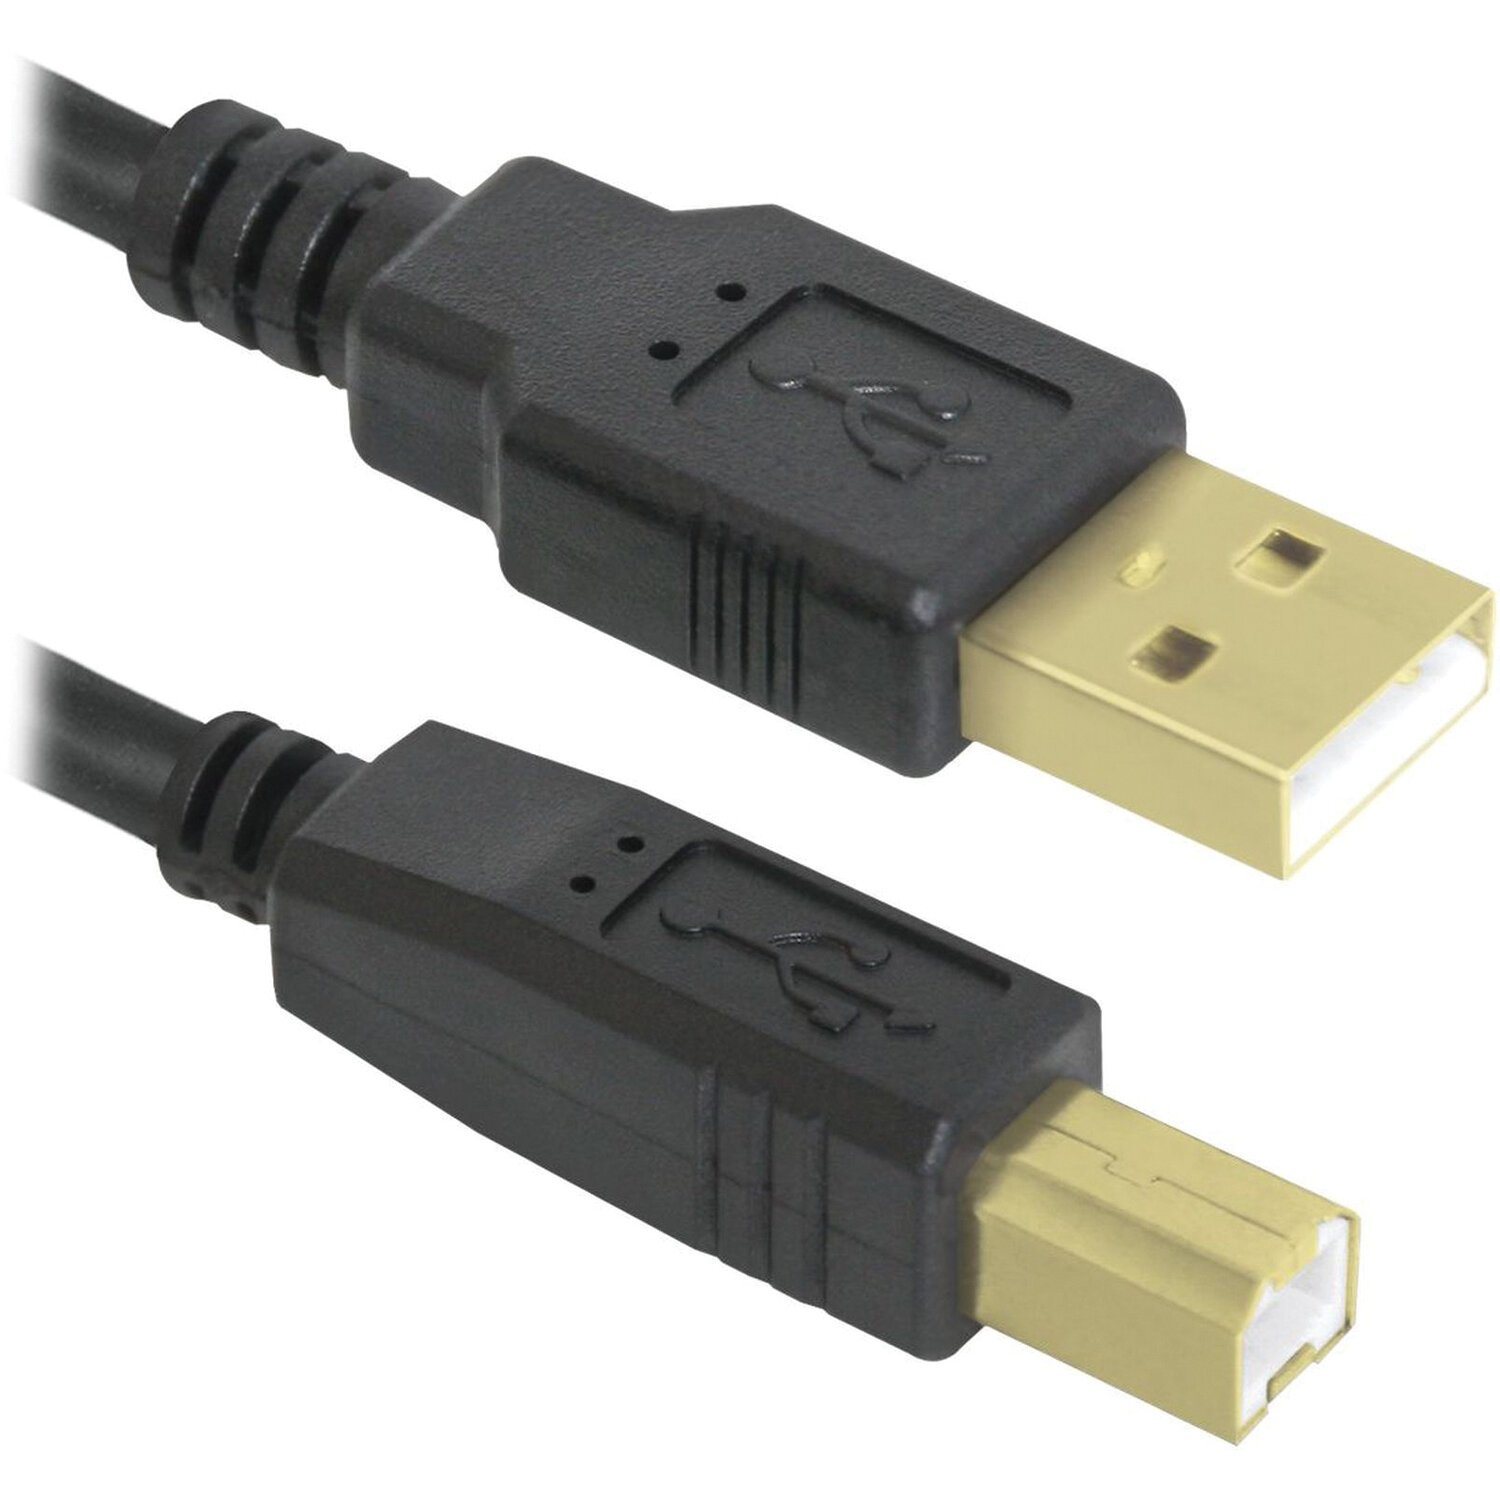  USB 2.0 AM-BM, 3 . DEFENDER 87431,  2 .